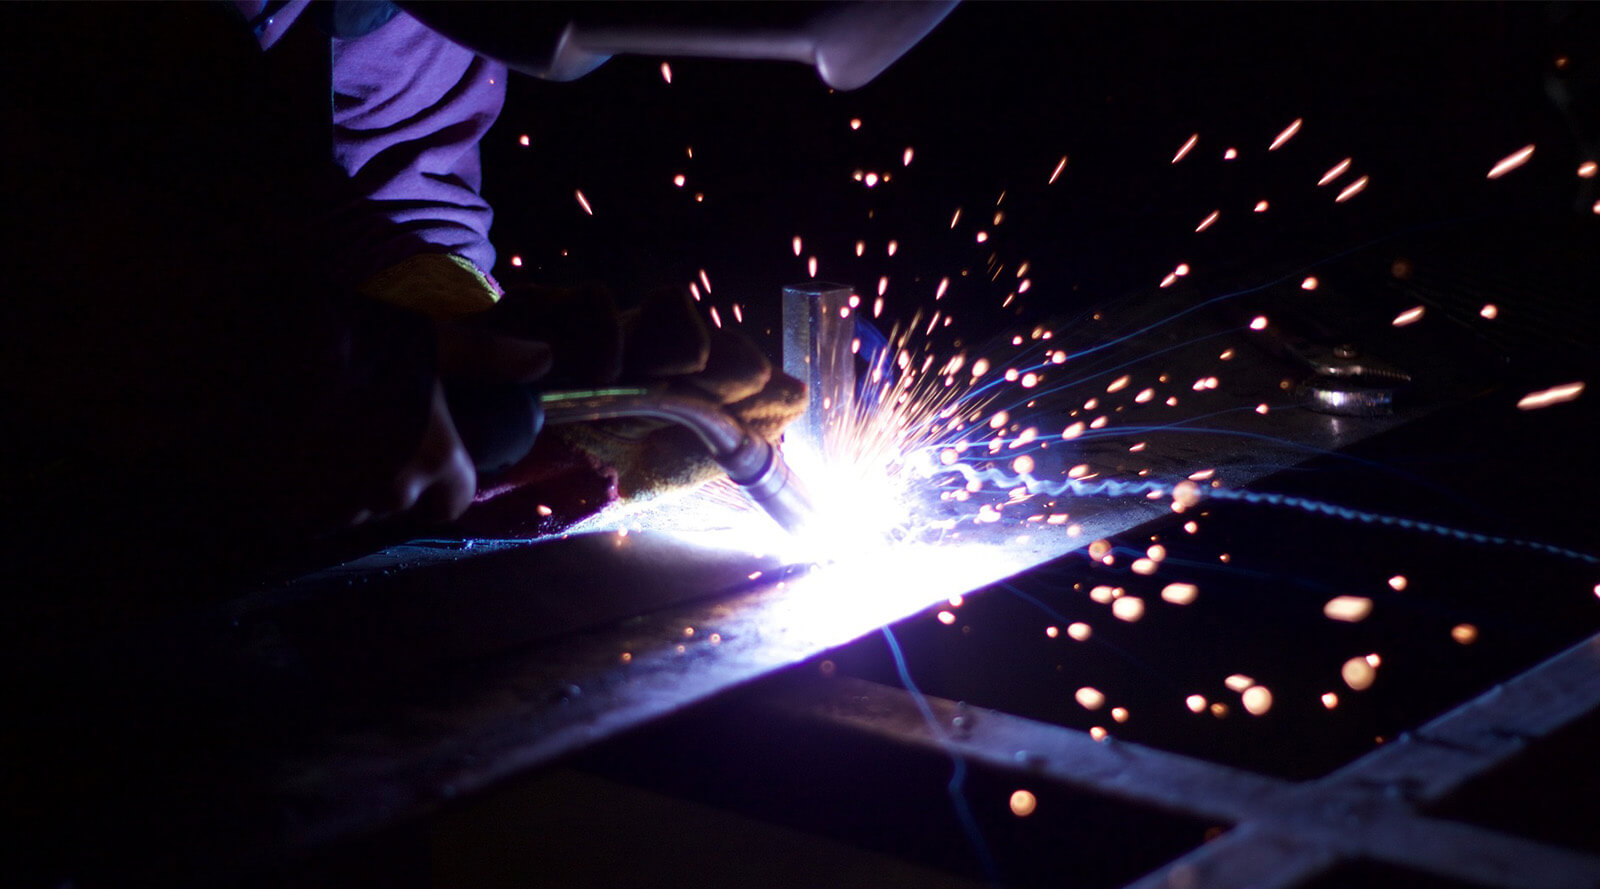 A welding and training manpower